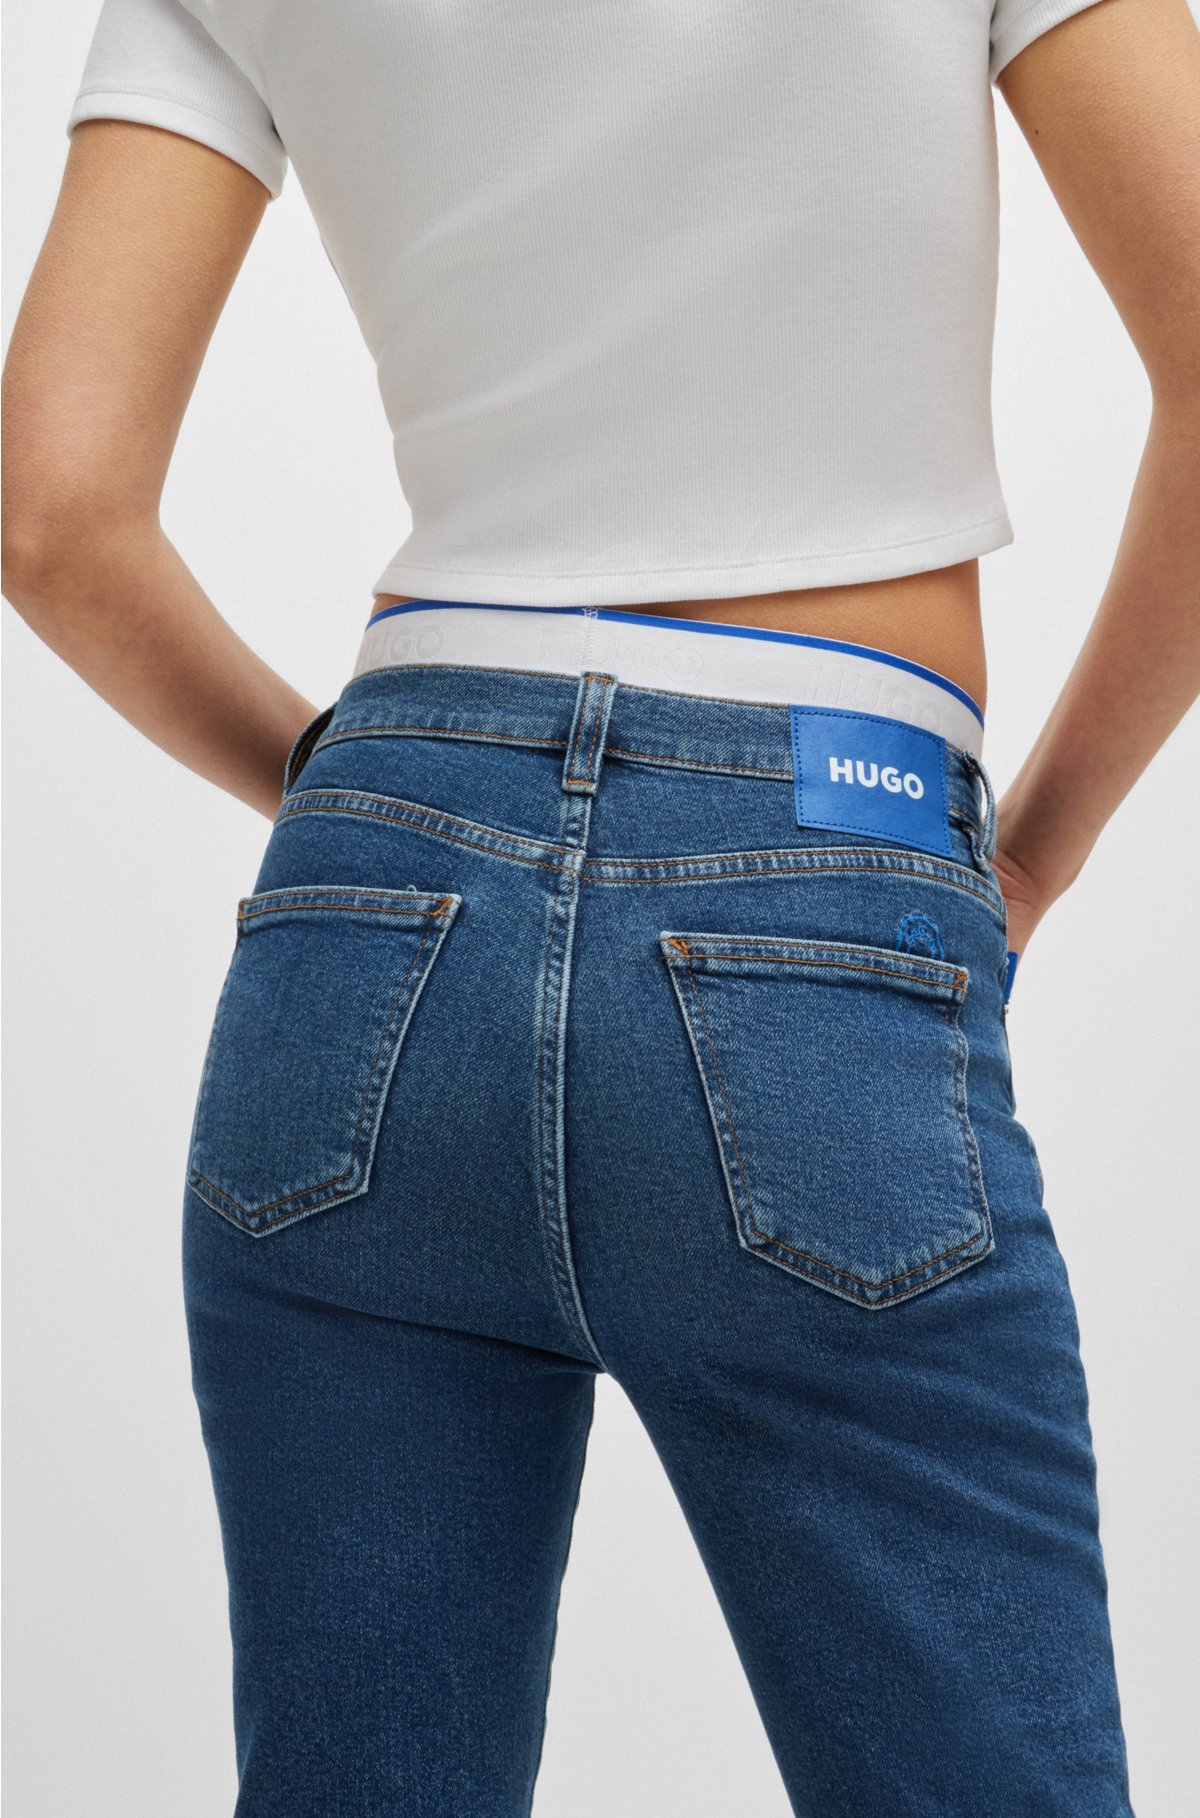 HUGO - Skinny-fit jeans in medium-blue stretch denim